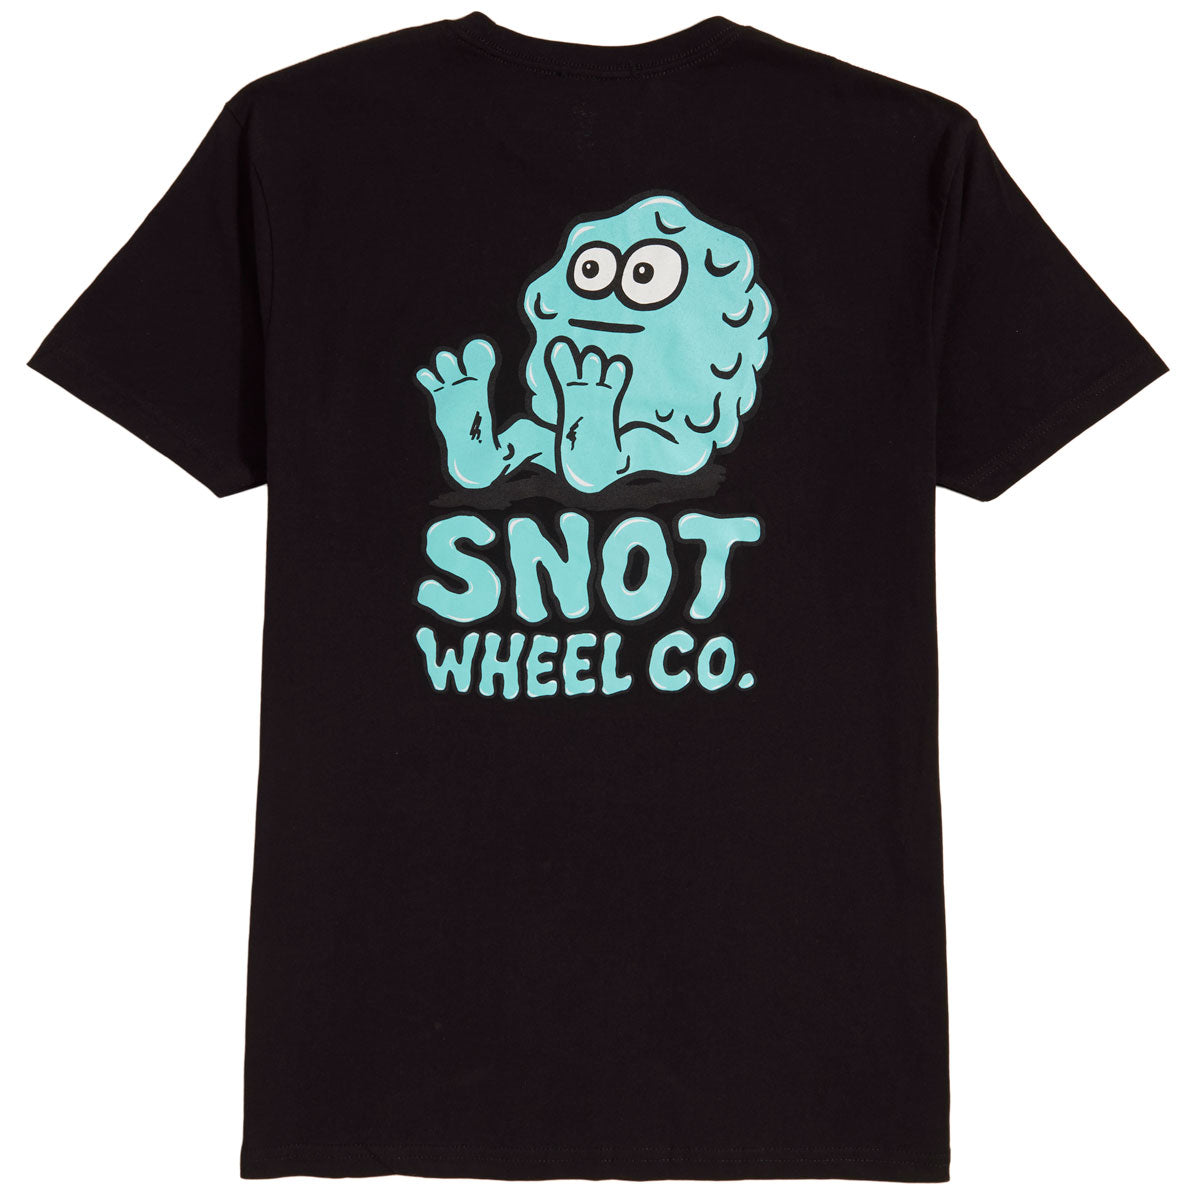 Snot Booger Logo T-Shirt - Black image 1